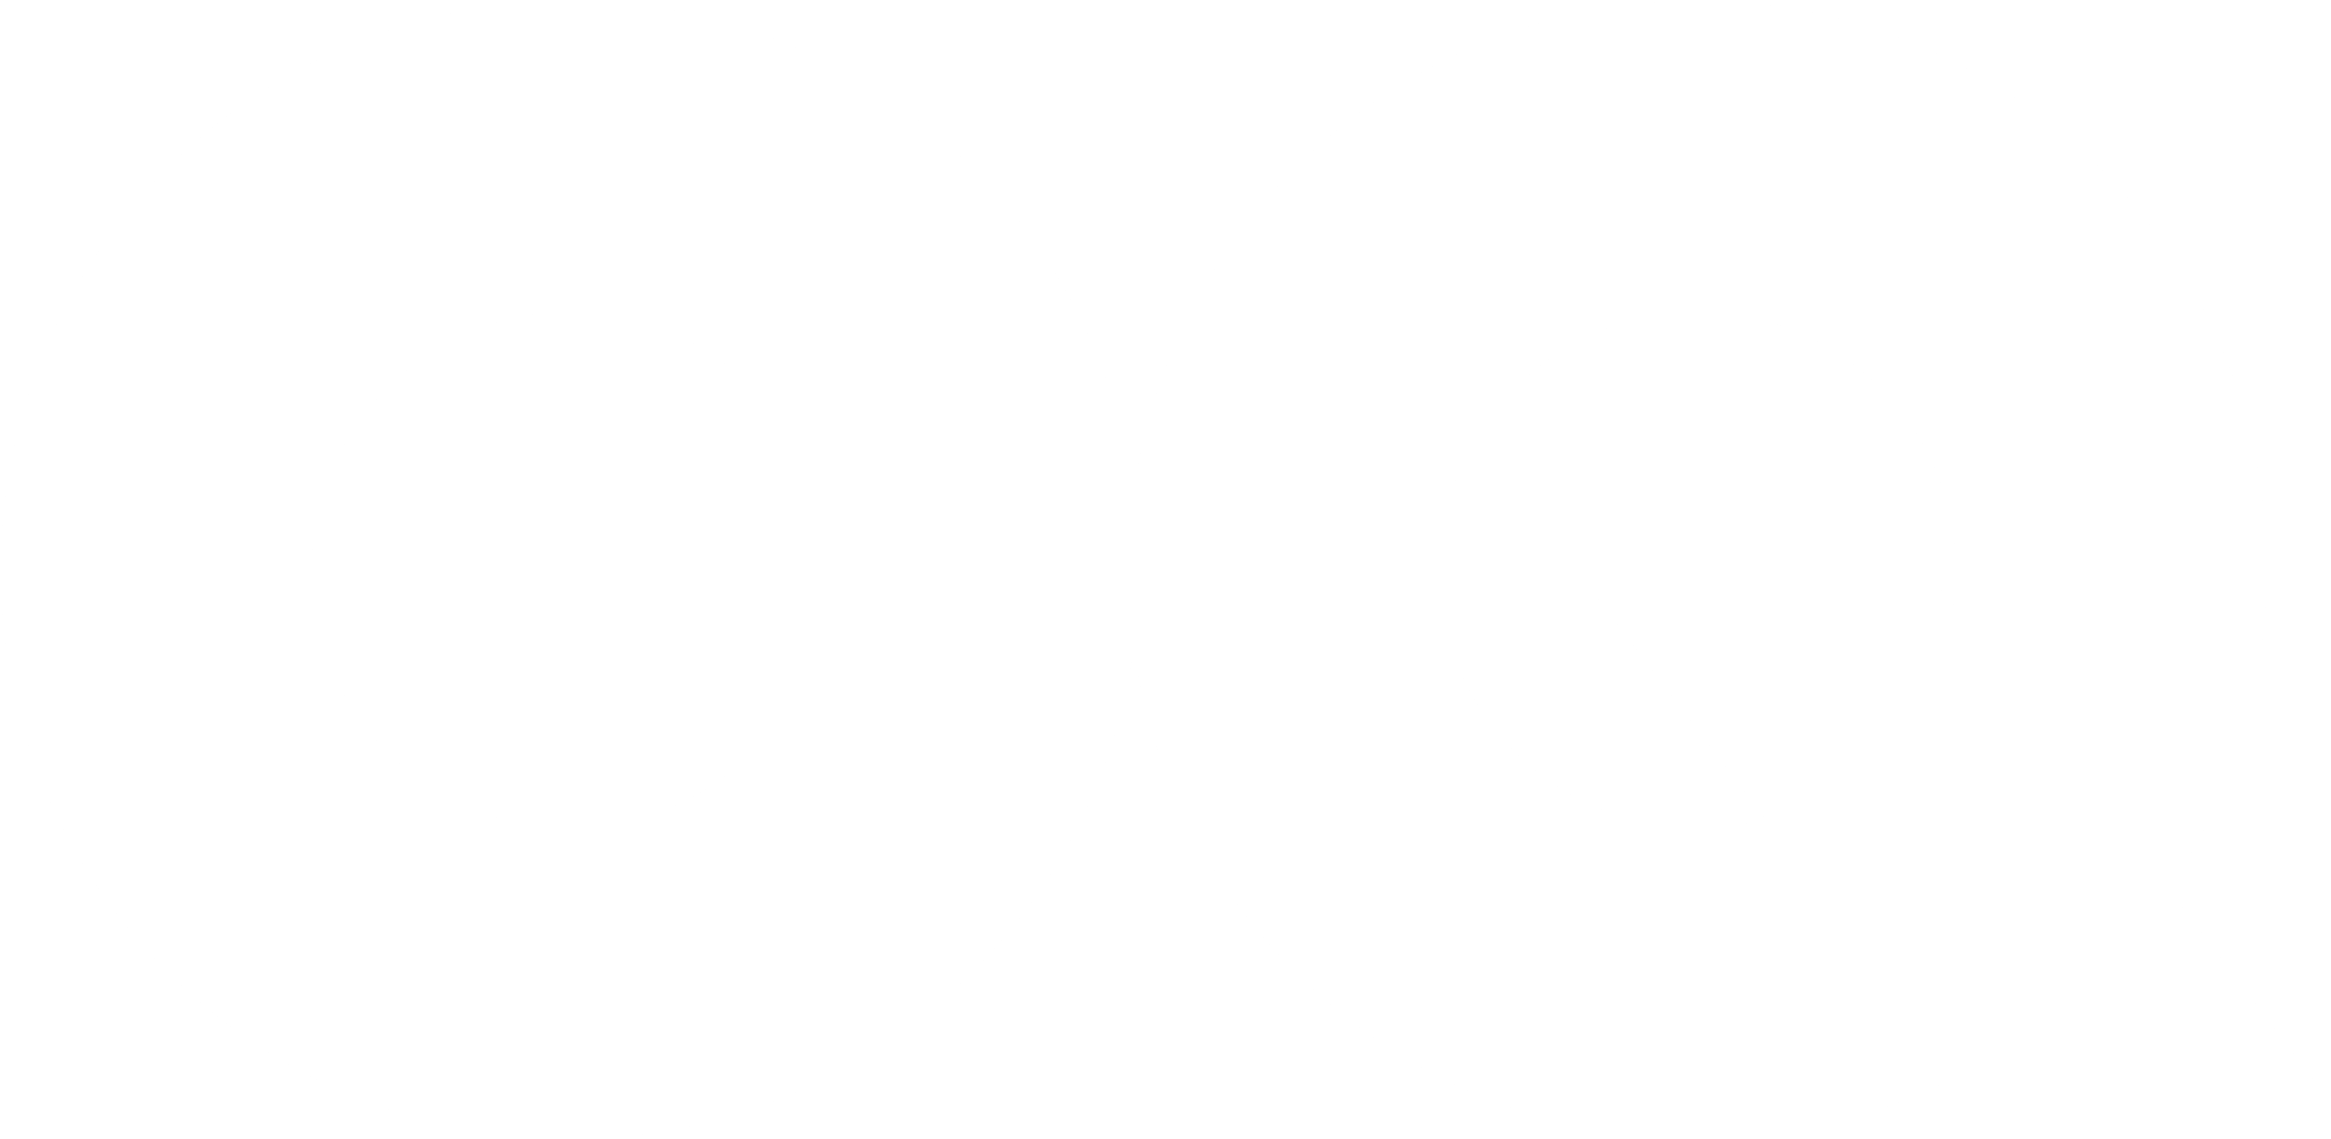 GQ Logo